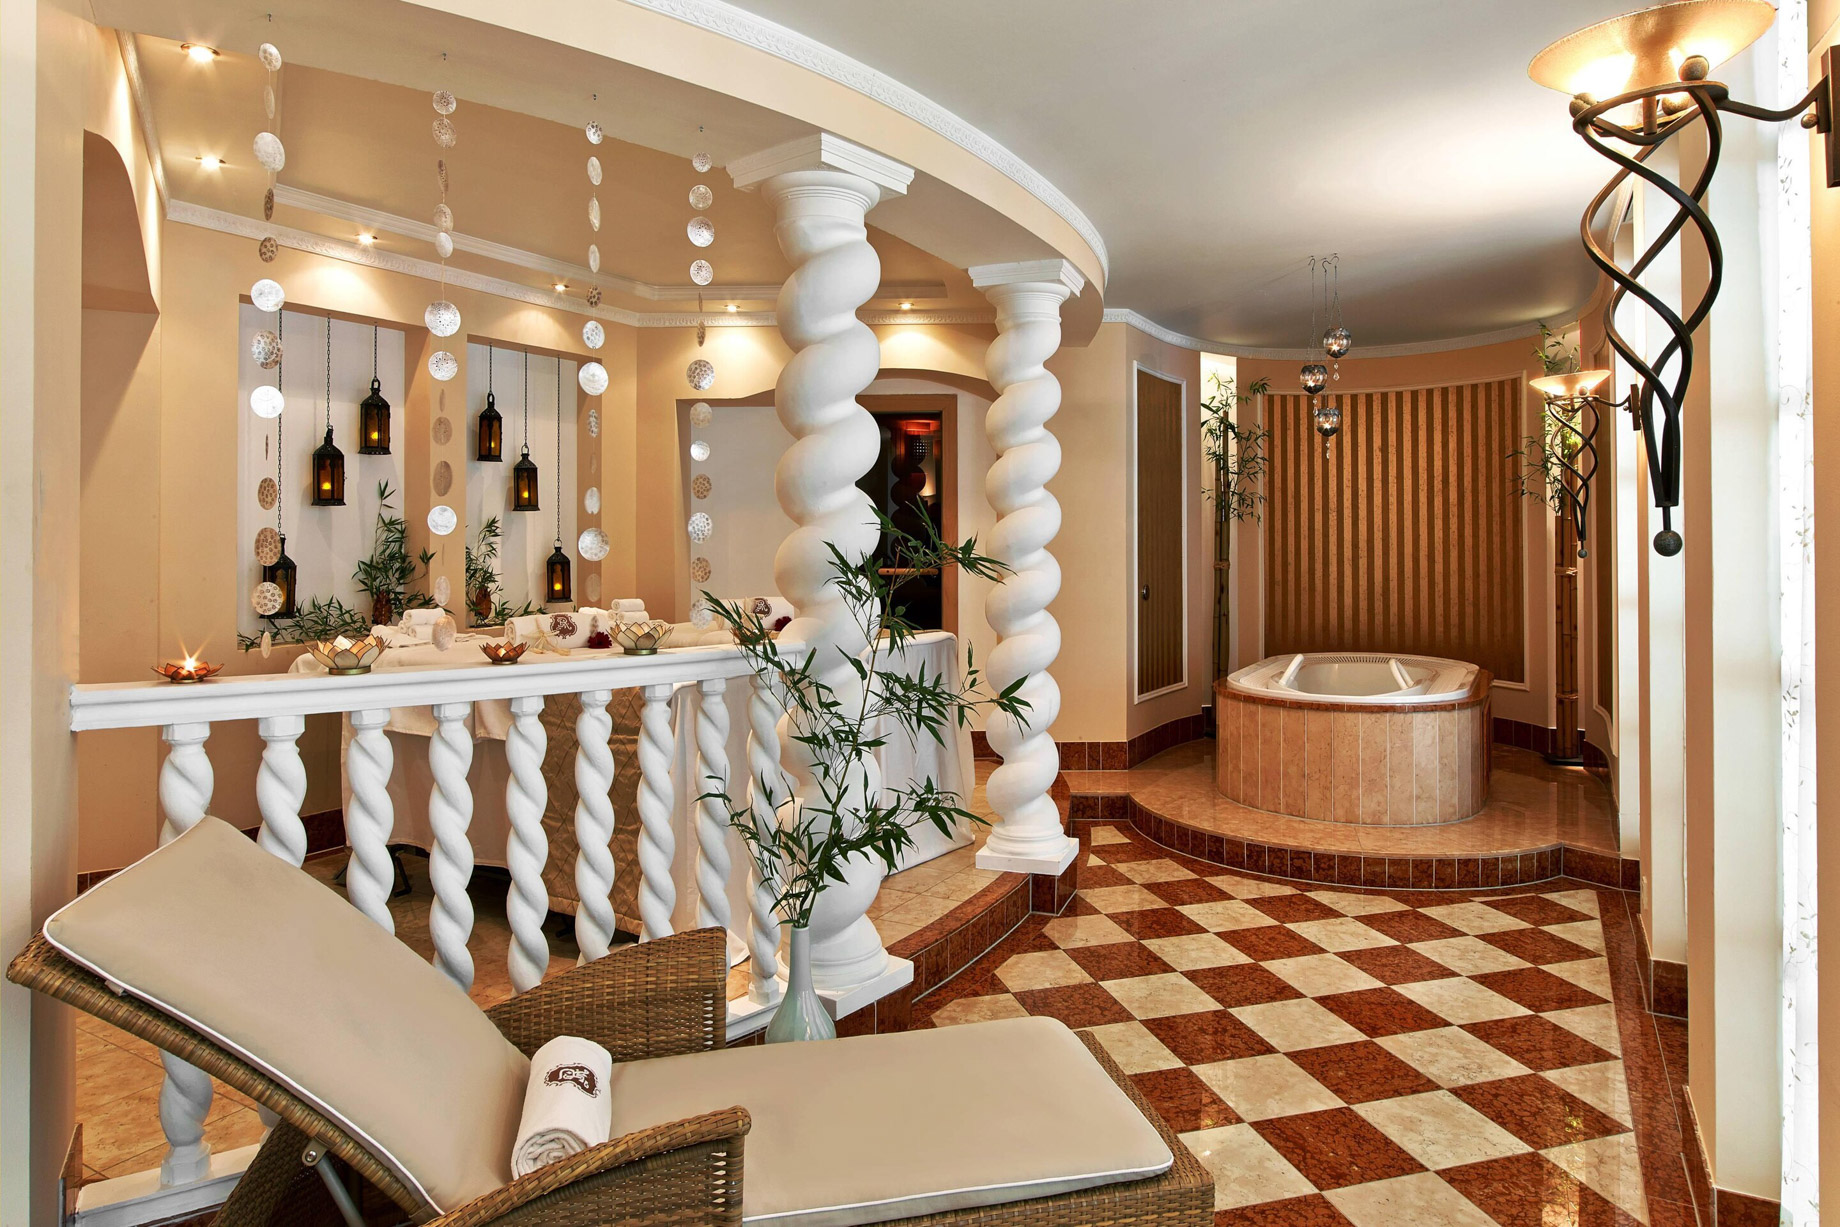 The St. Regis Mardavall Mallorca Resort – Palma de Mallorca, Spain – Spa Treatment Room